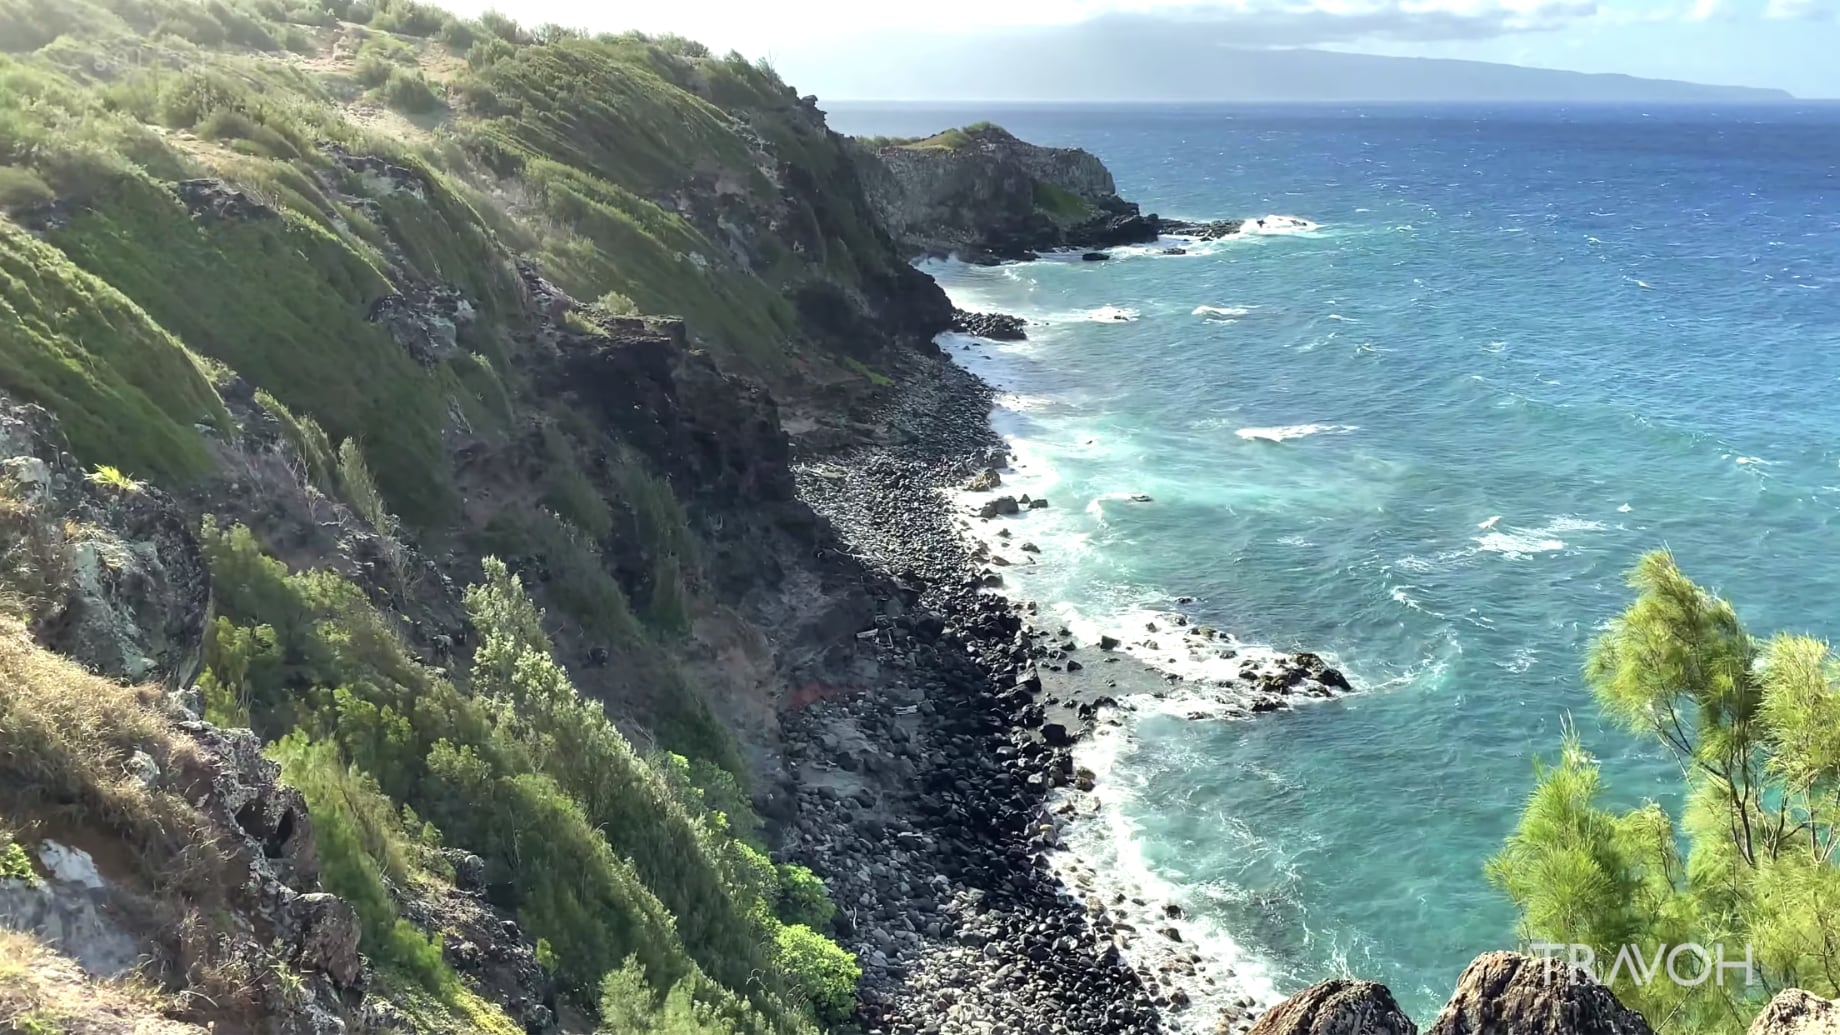 Cliffside - Crashing Waves - Ocean Sounds - Volcanic Rock - Maui, Hawaii, USA - 4K Travel